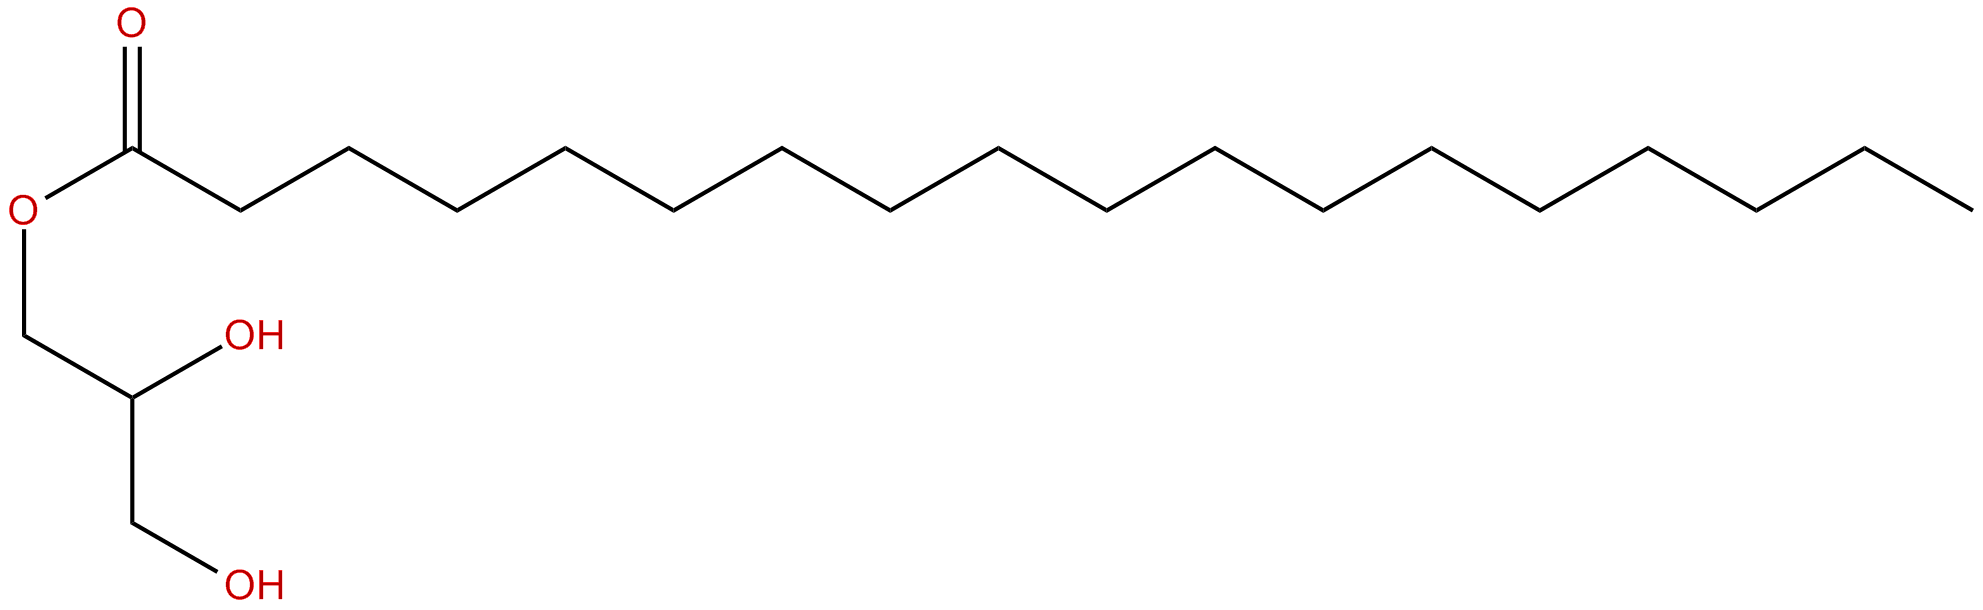 Image of 2,3-dihydroxypropyl octadecanoate